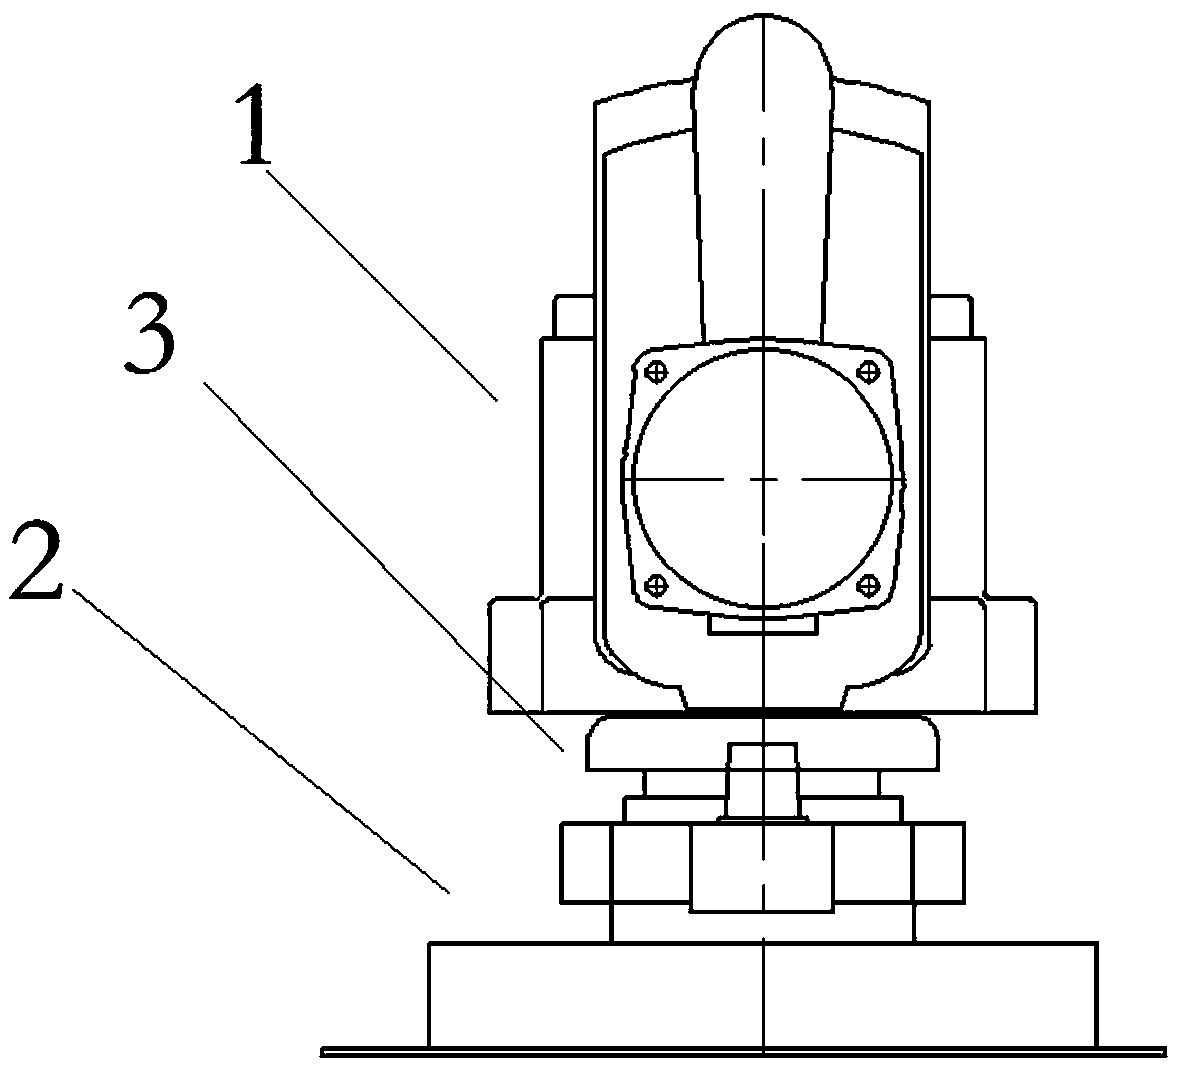 Hand wheel, lever hoist comprising same and hoist device